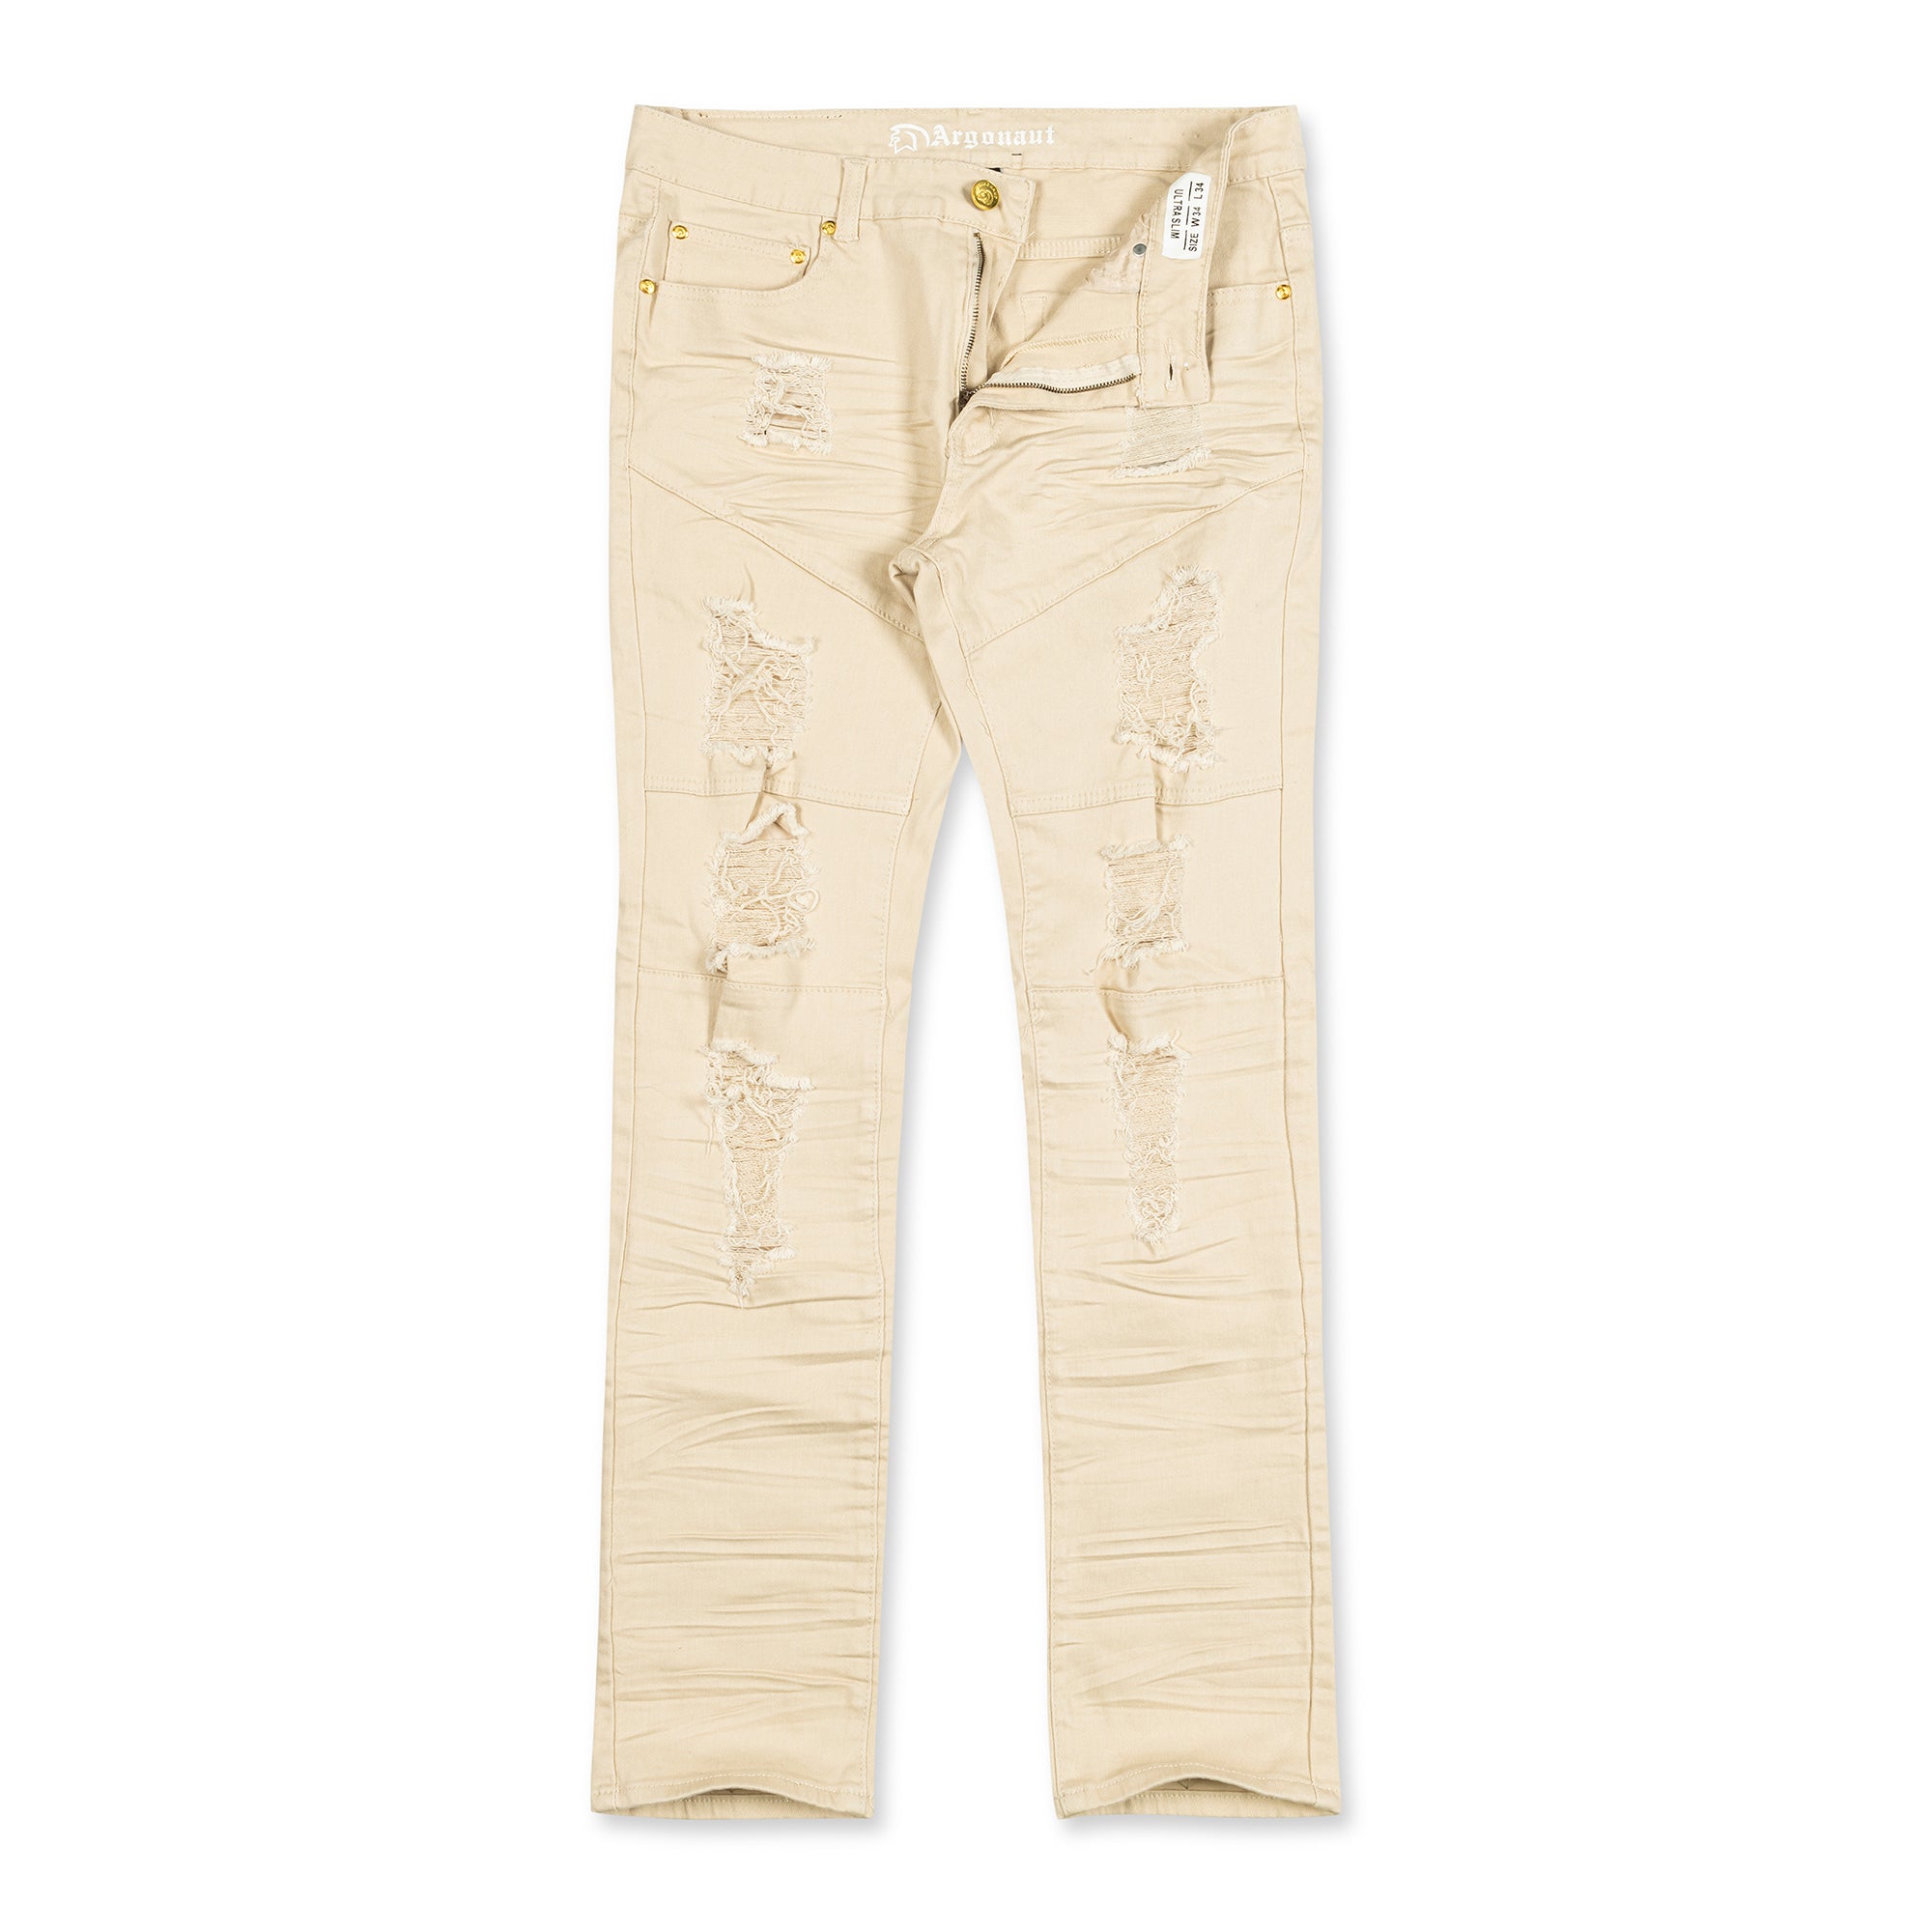 Argonaut Nations Men Ripped Jeans (Bone)-Bone-44W X 32L-Nexus Clothing